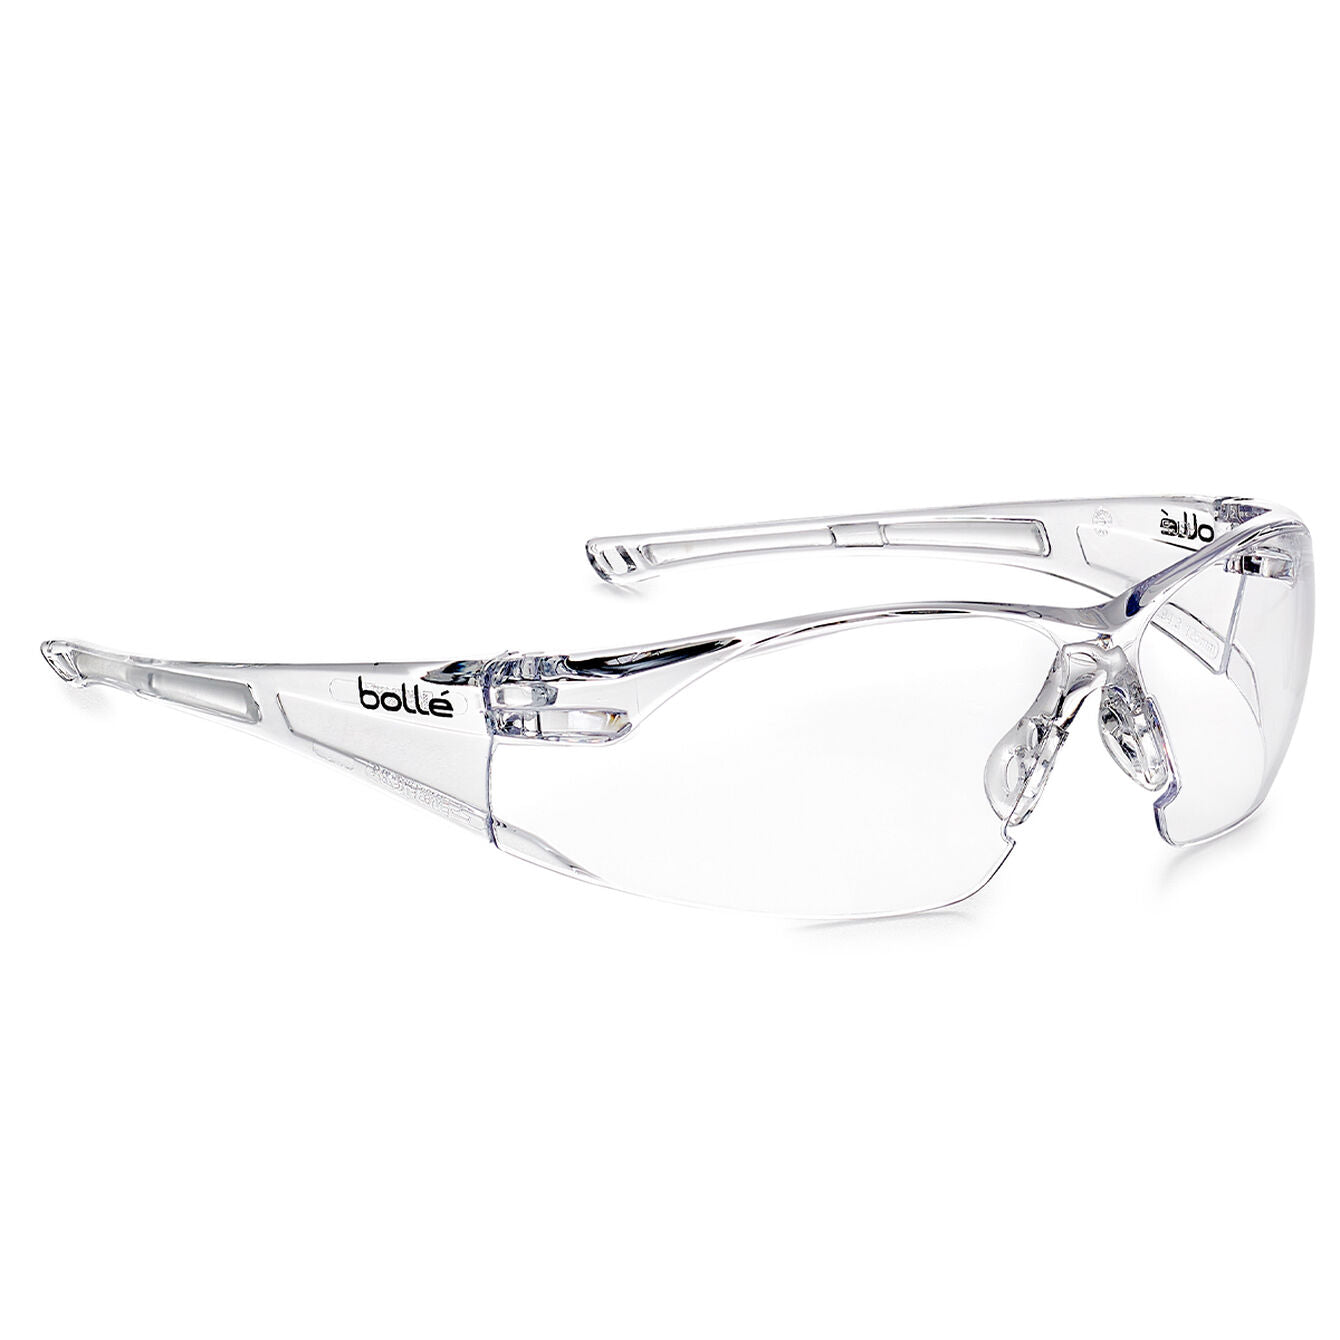 Bolle RUSH Clear Lens Safety Glasses - RUSHPSI